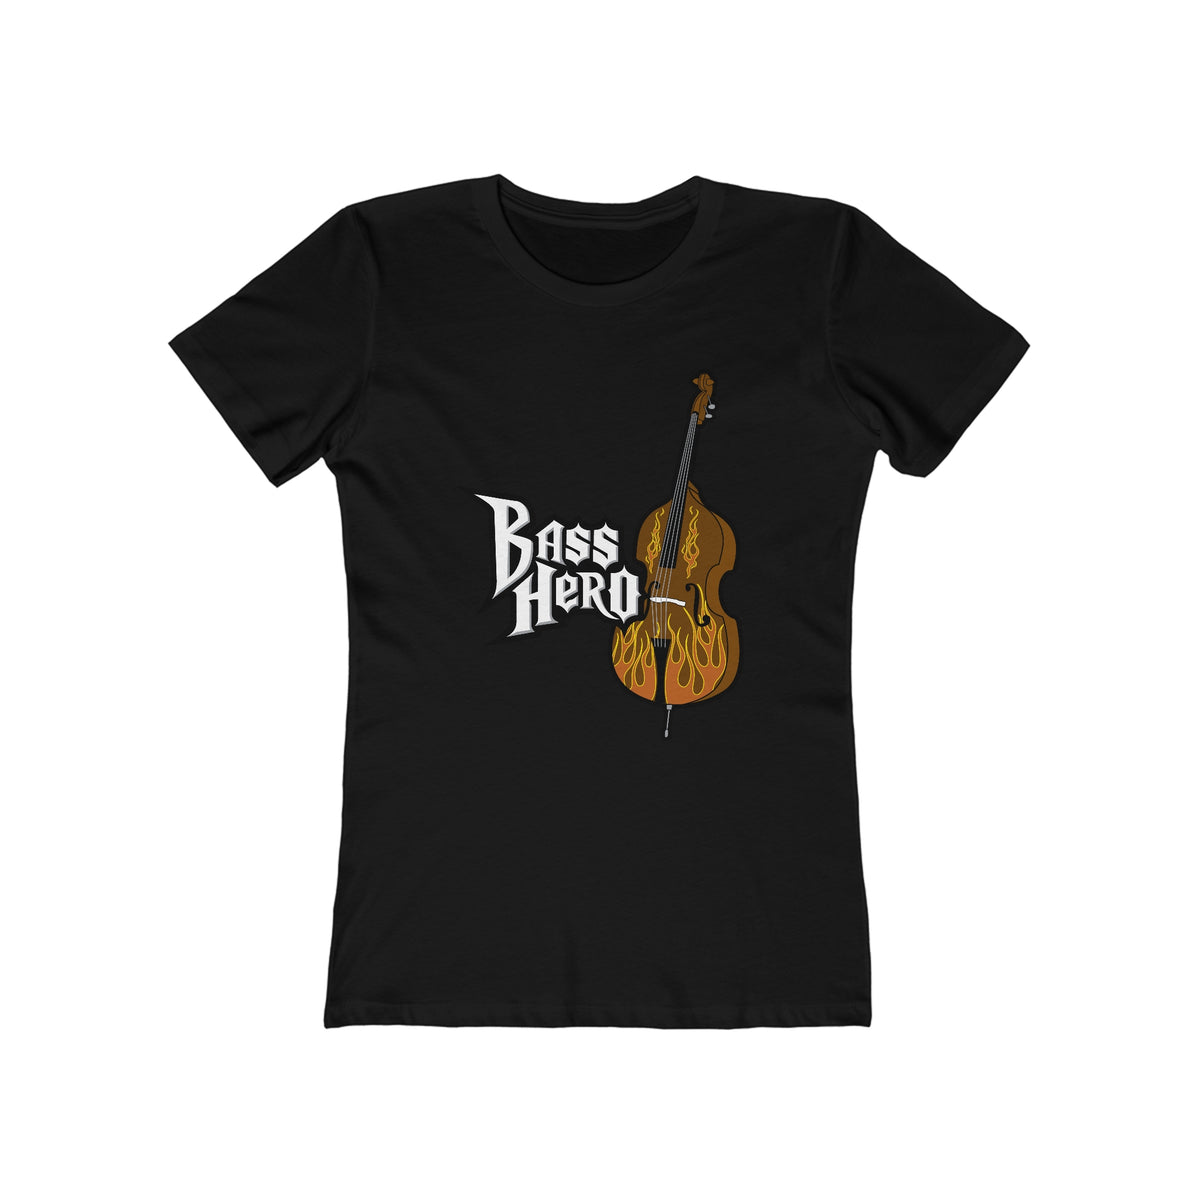 Bass Hero - Women’s T-Shirt